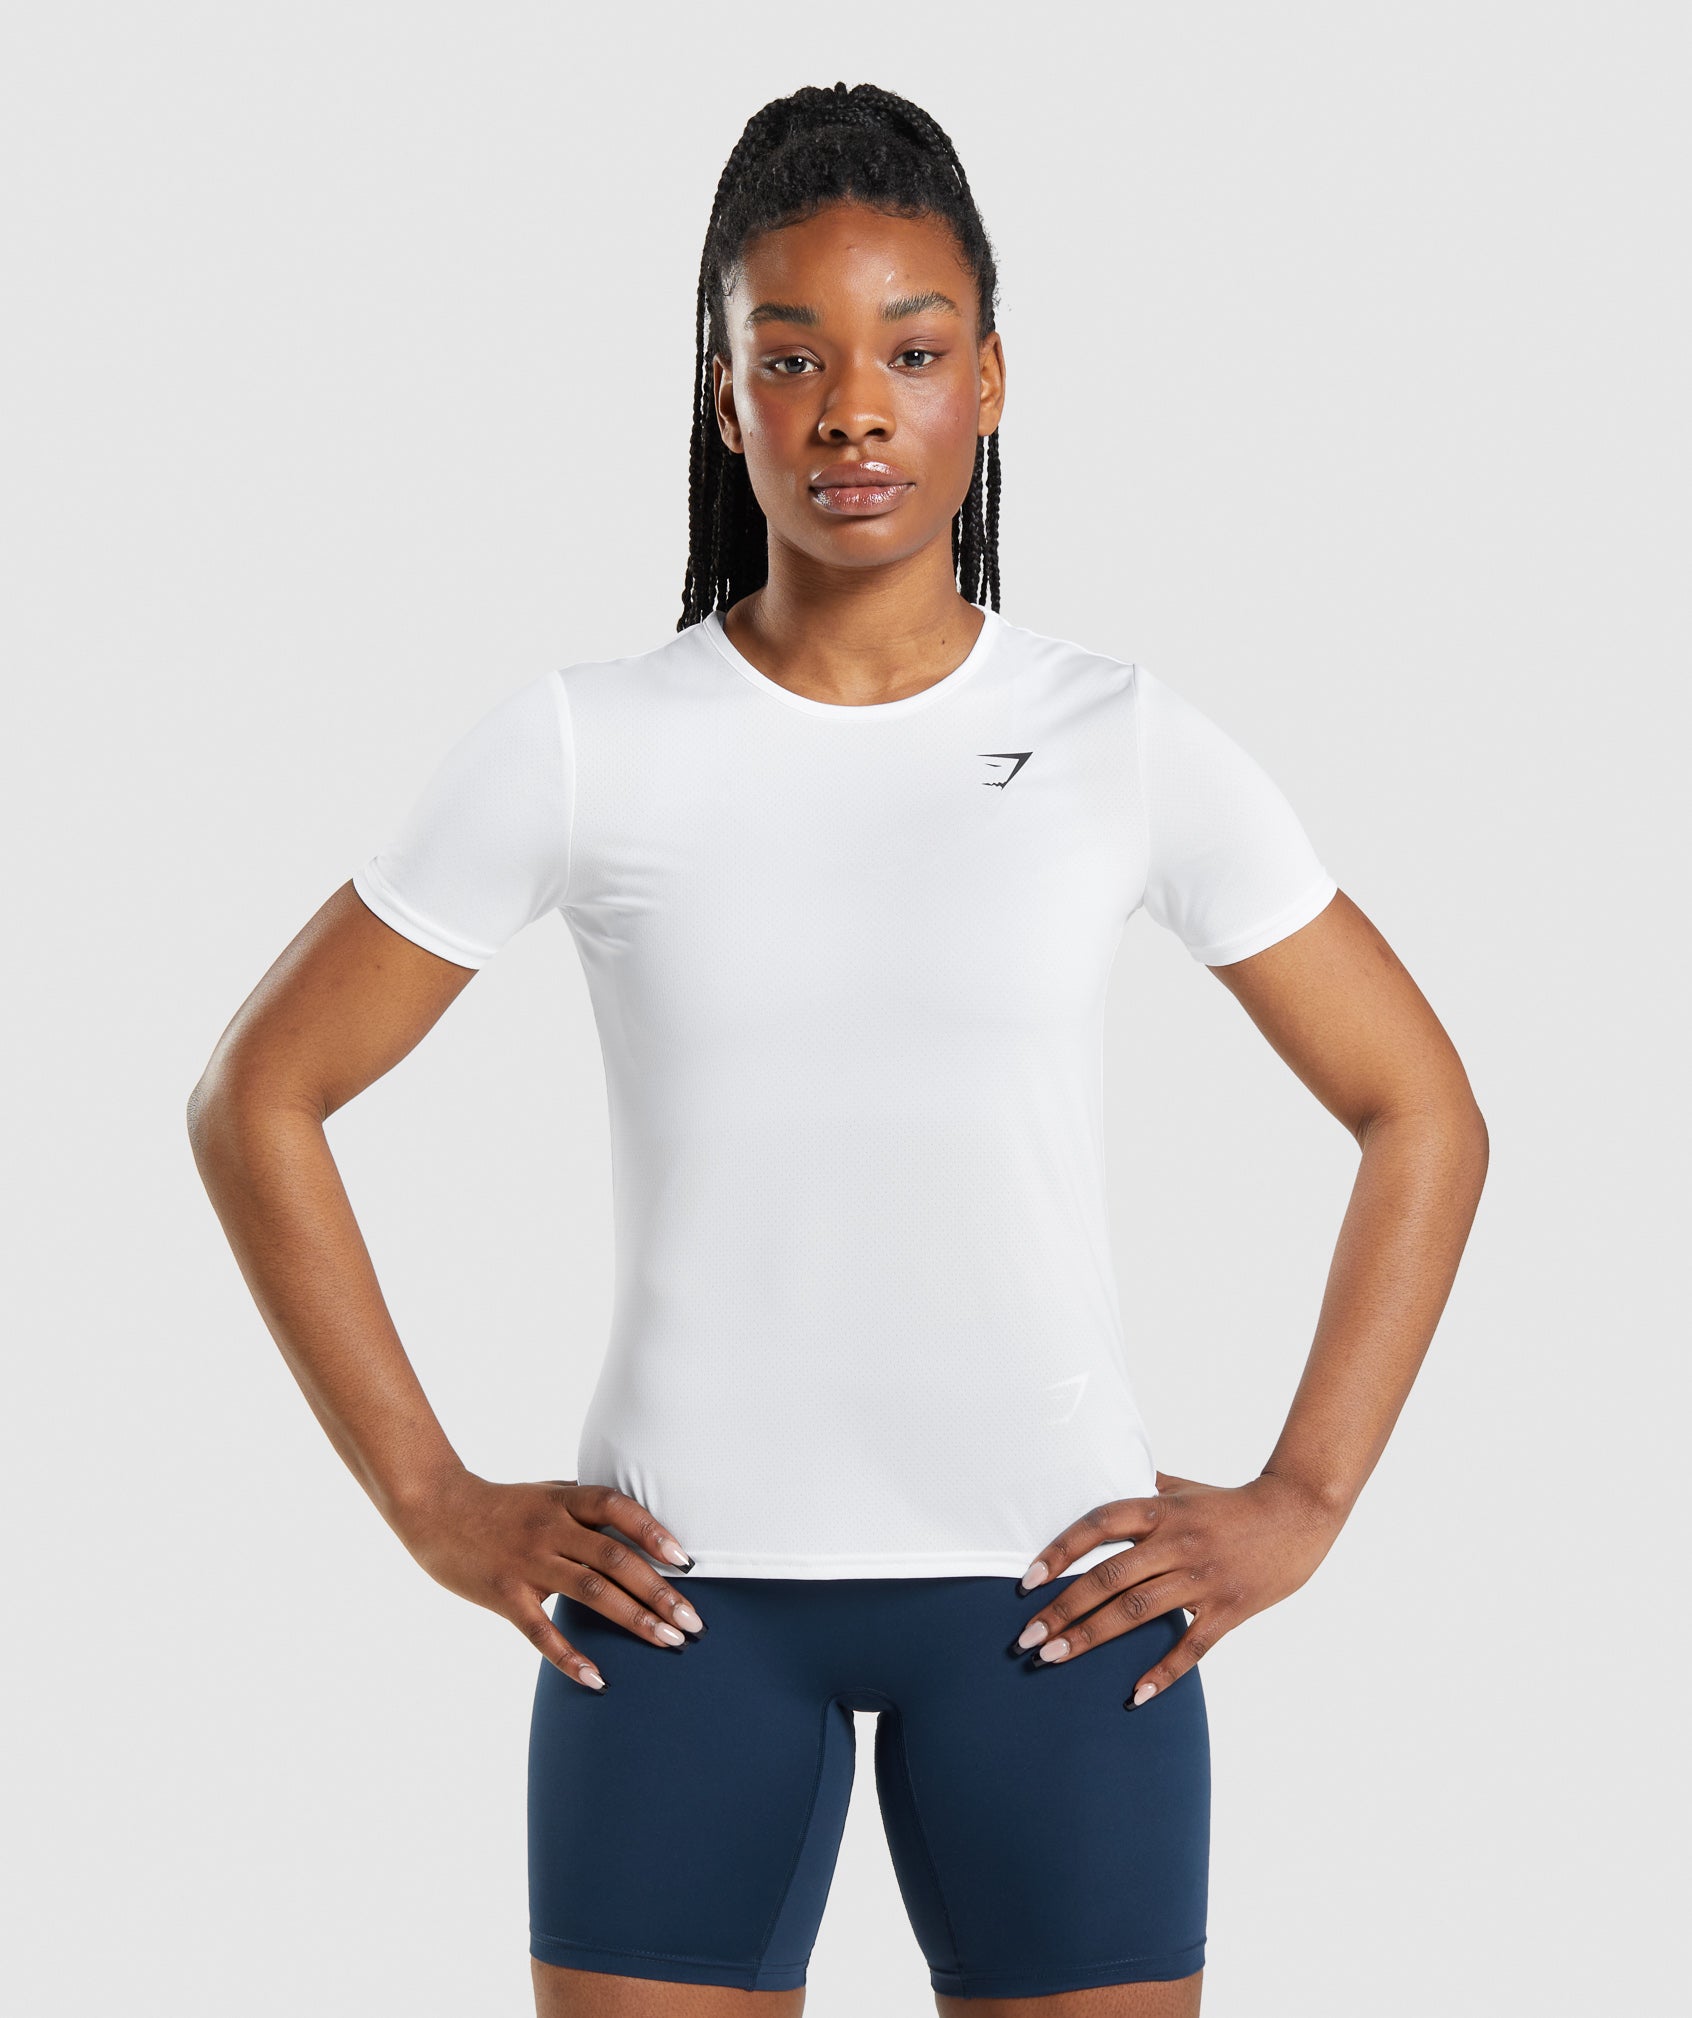 Women's Gym & Workout Shirts & Tops - Gymshark